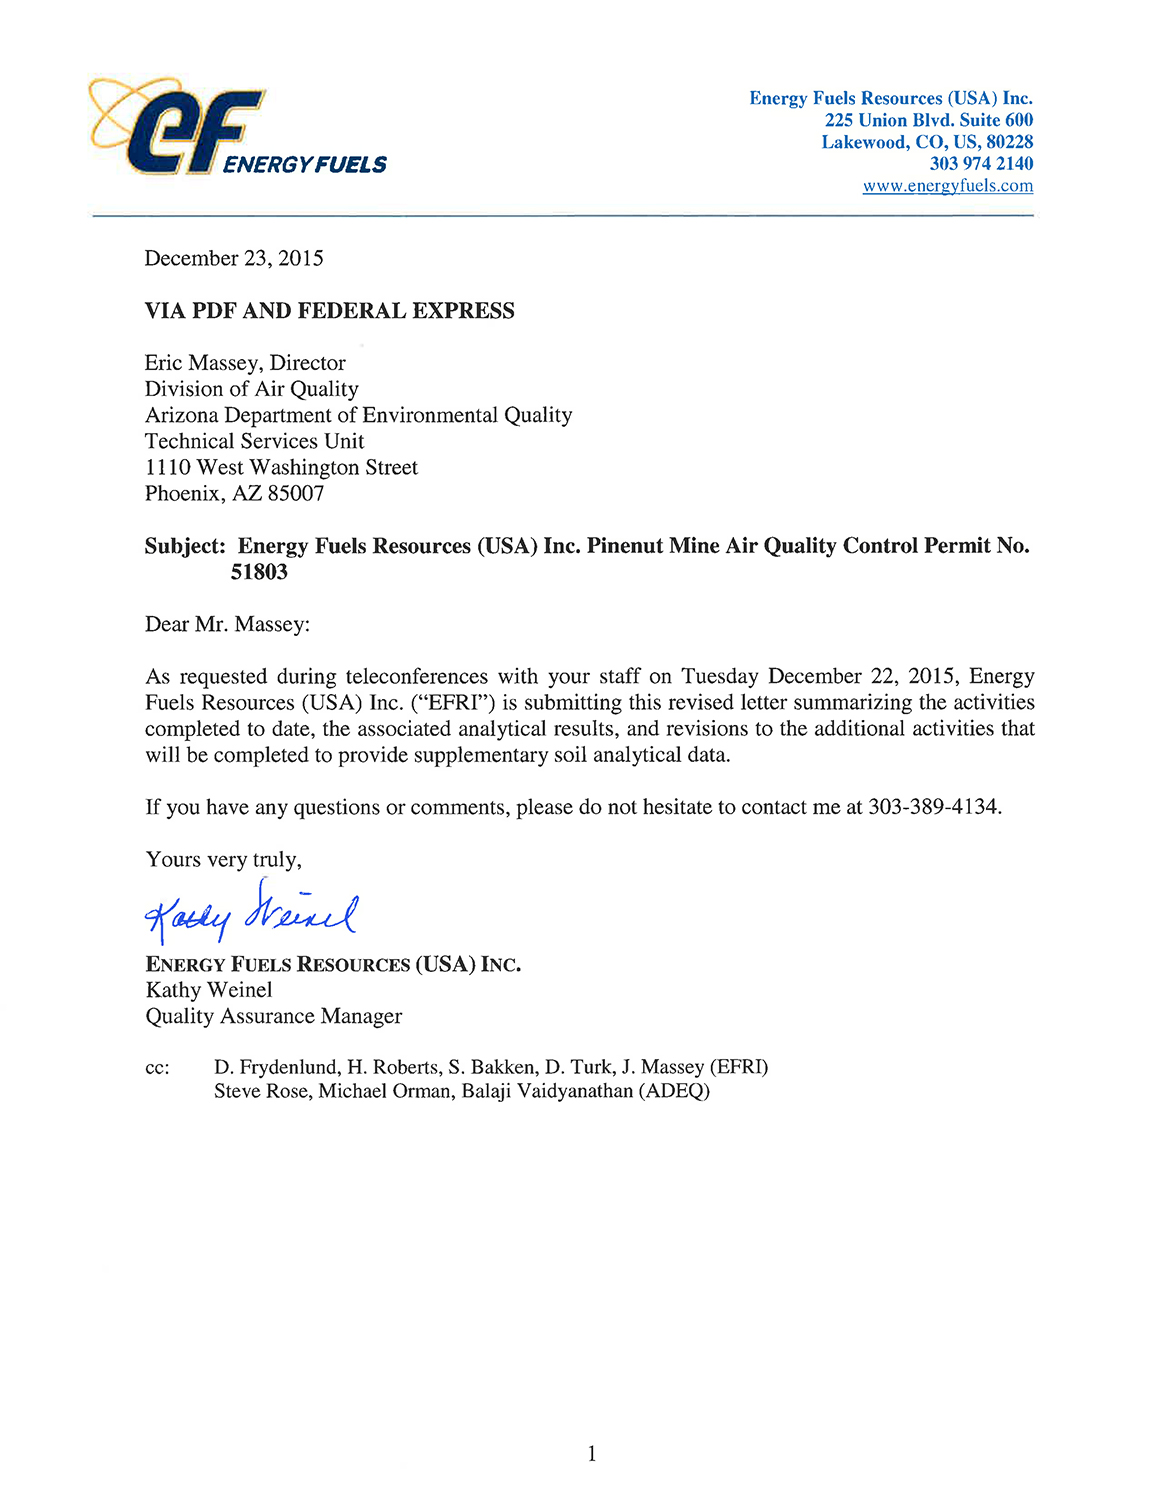 Letter regarding Pinenut Mine air quality permit